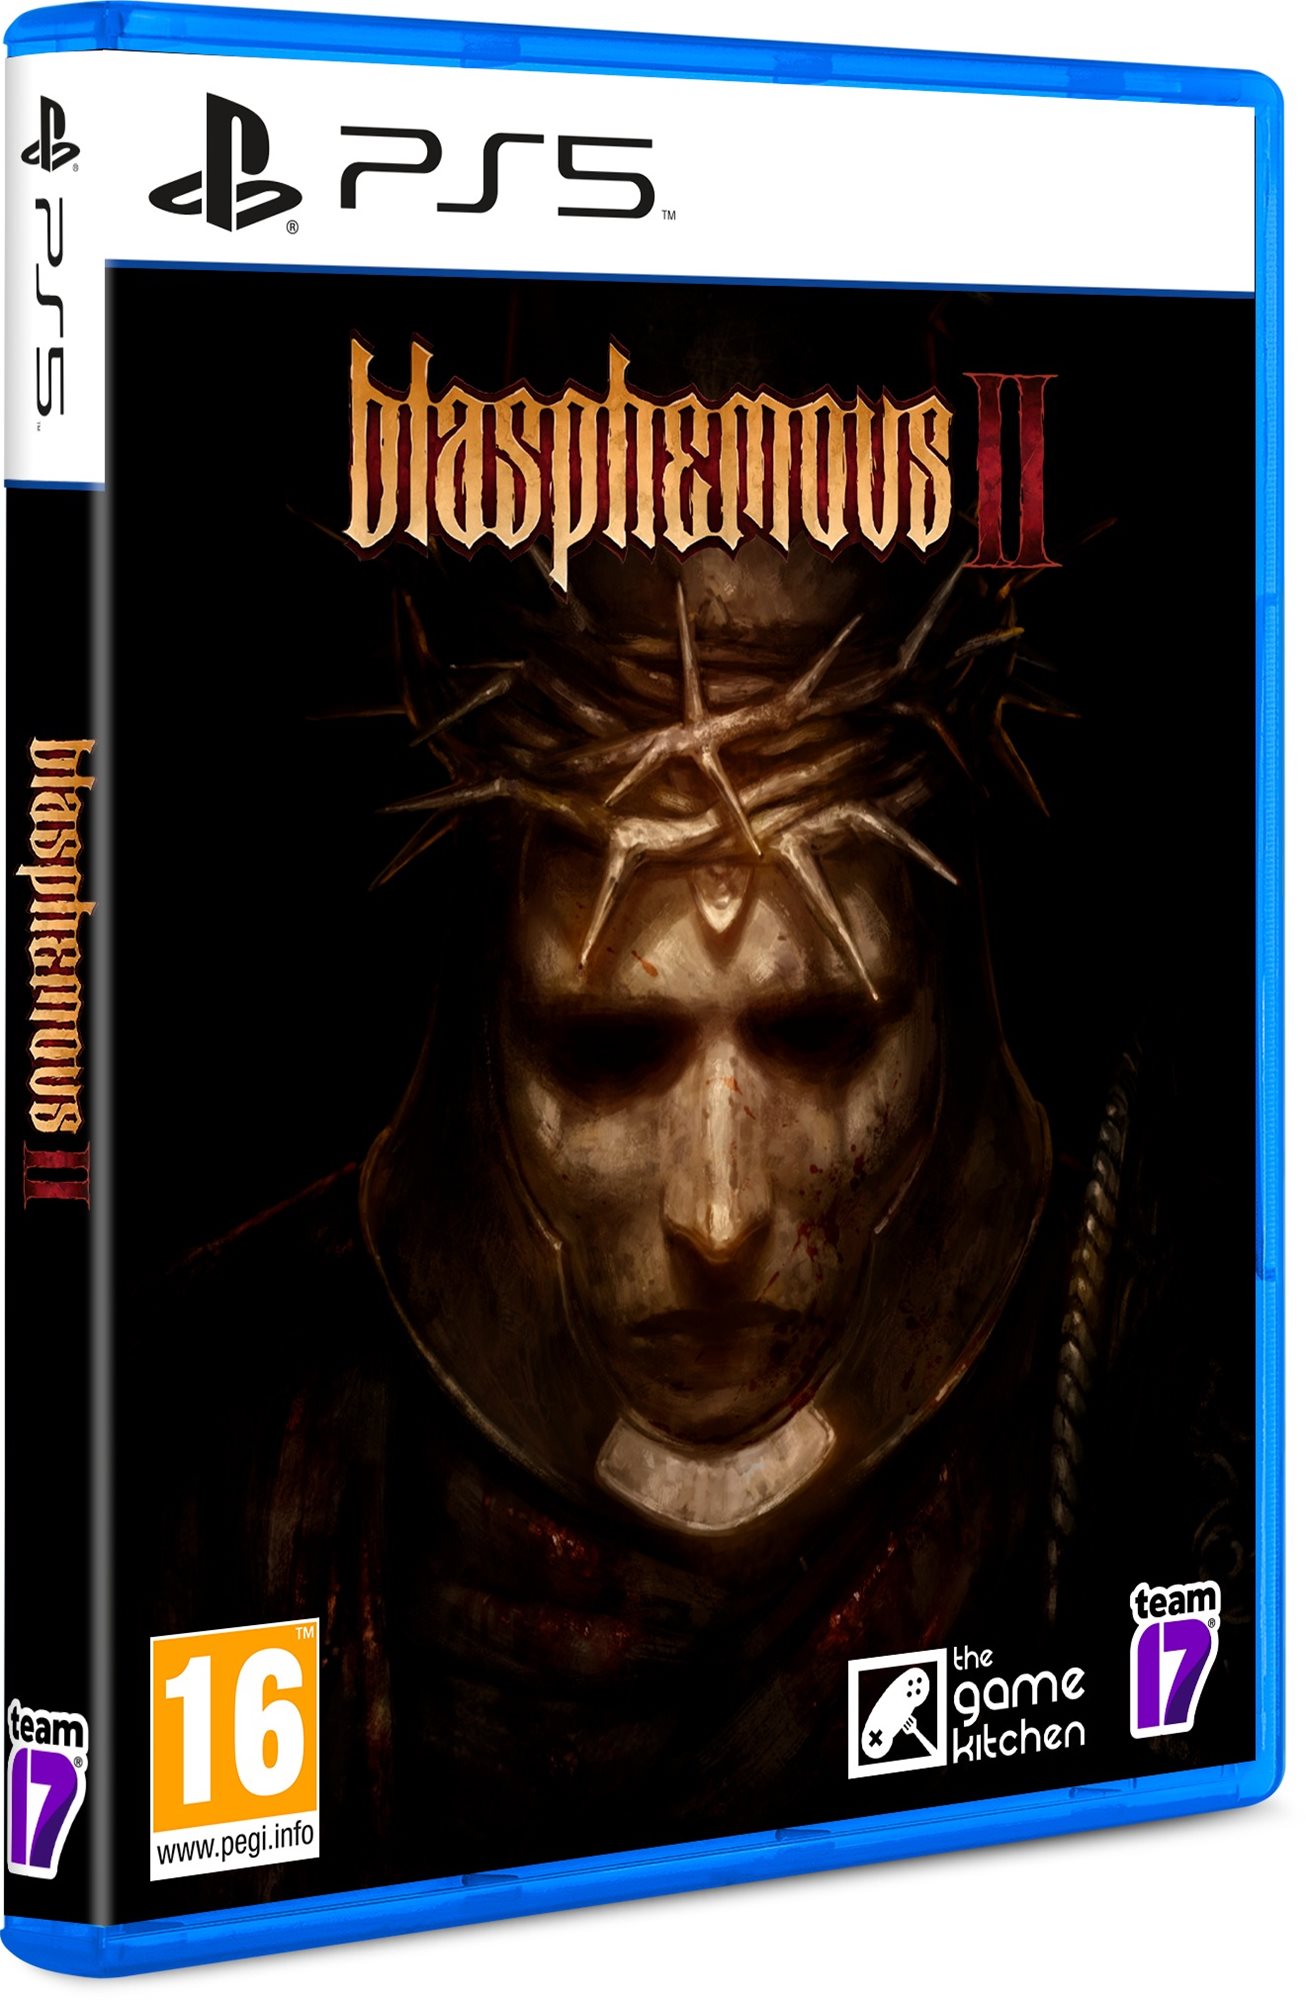 Blasphemous 2 - PS5